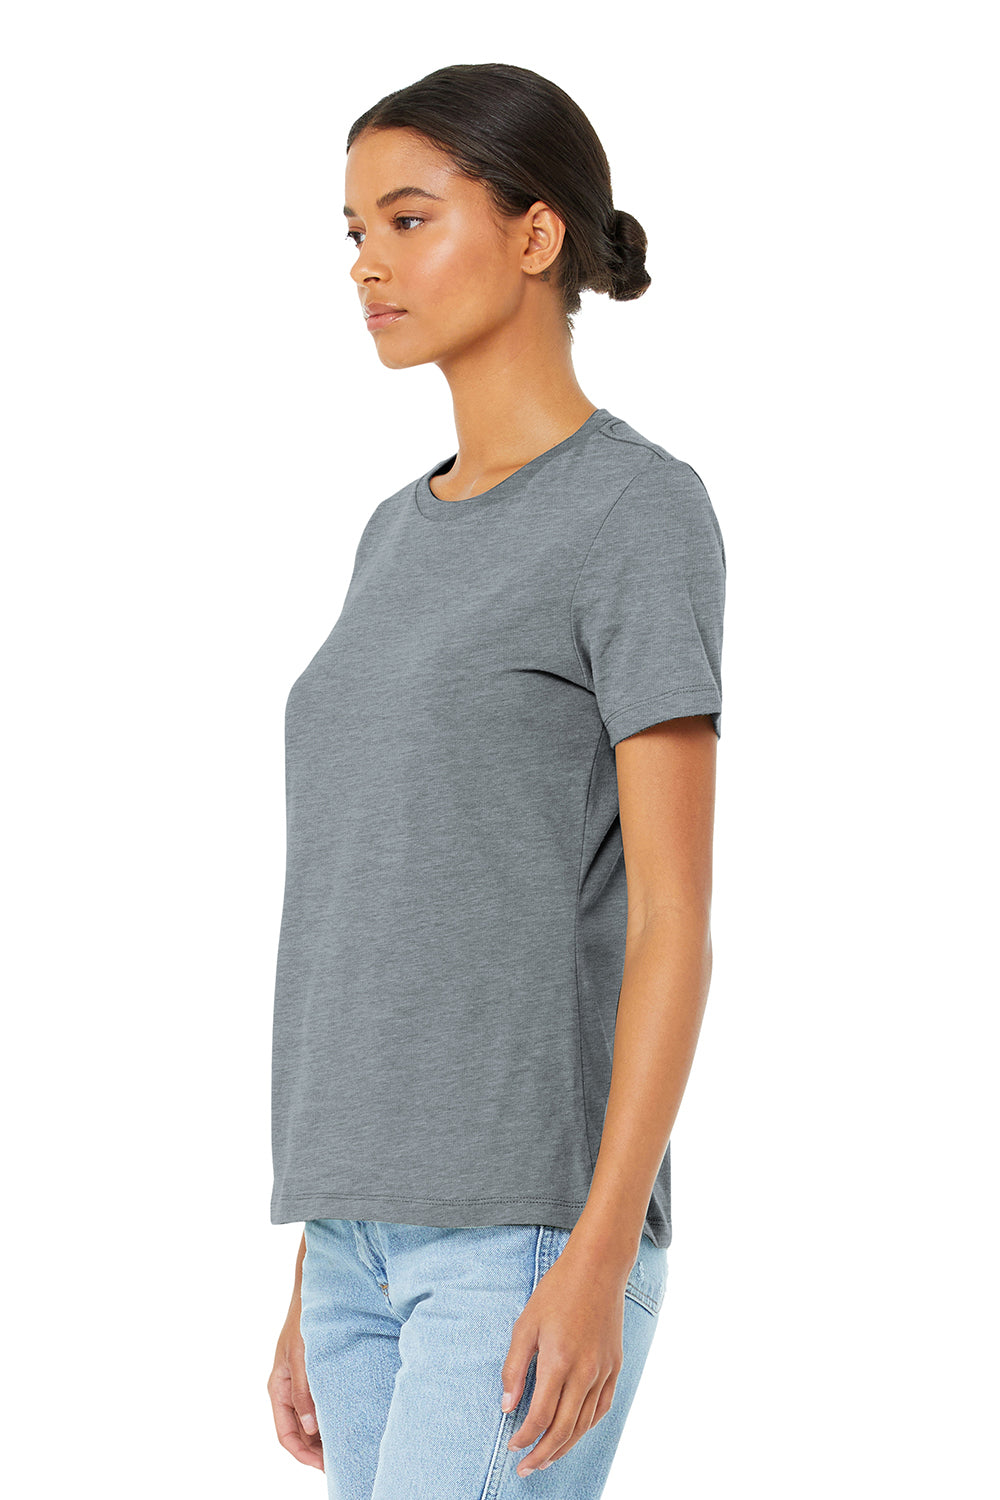 Bella + Canvas BC6400/B6400/6400 Womens Relaxed Jersey Short Sleeve Crewneck T-Shirt Athletic Grey Model 3Q